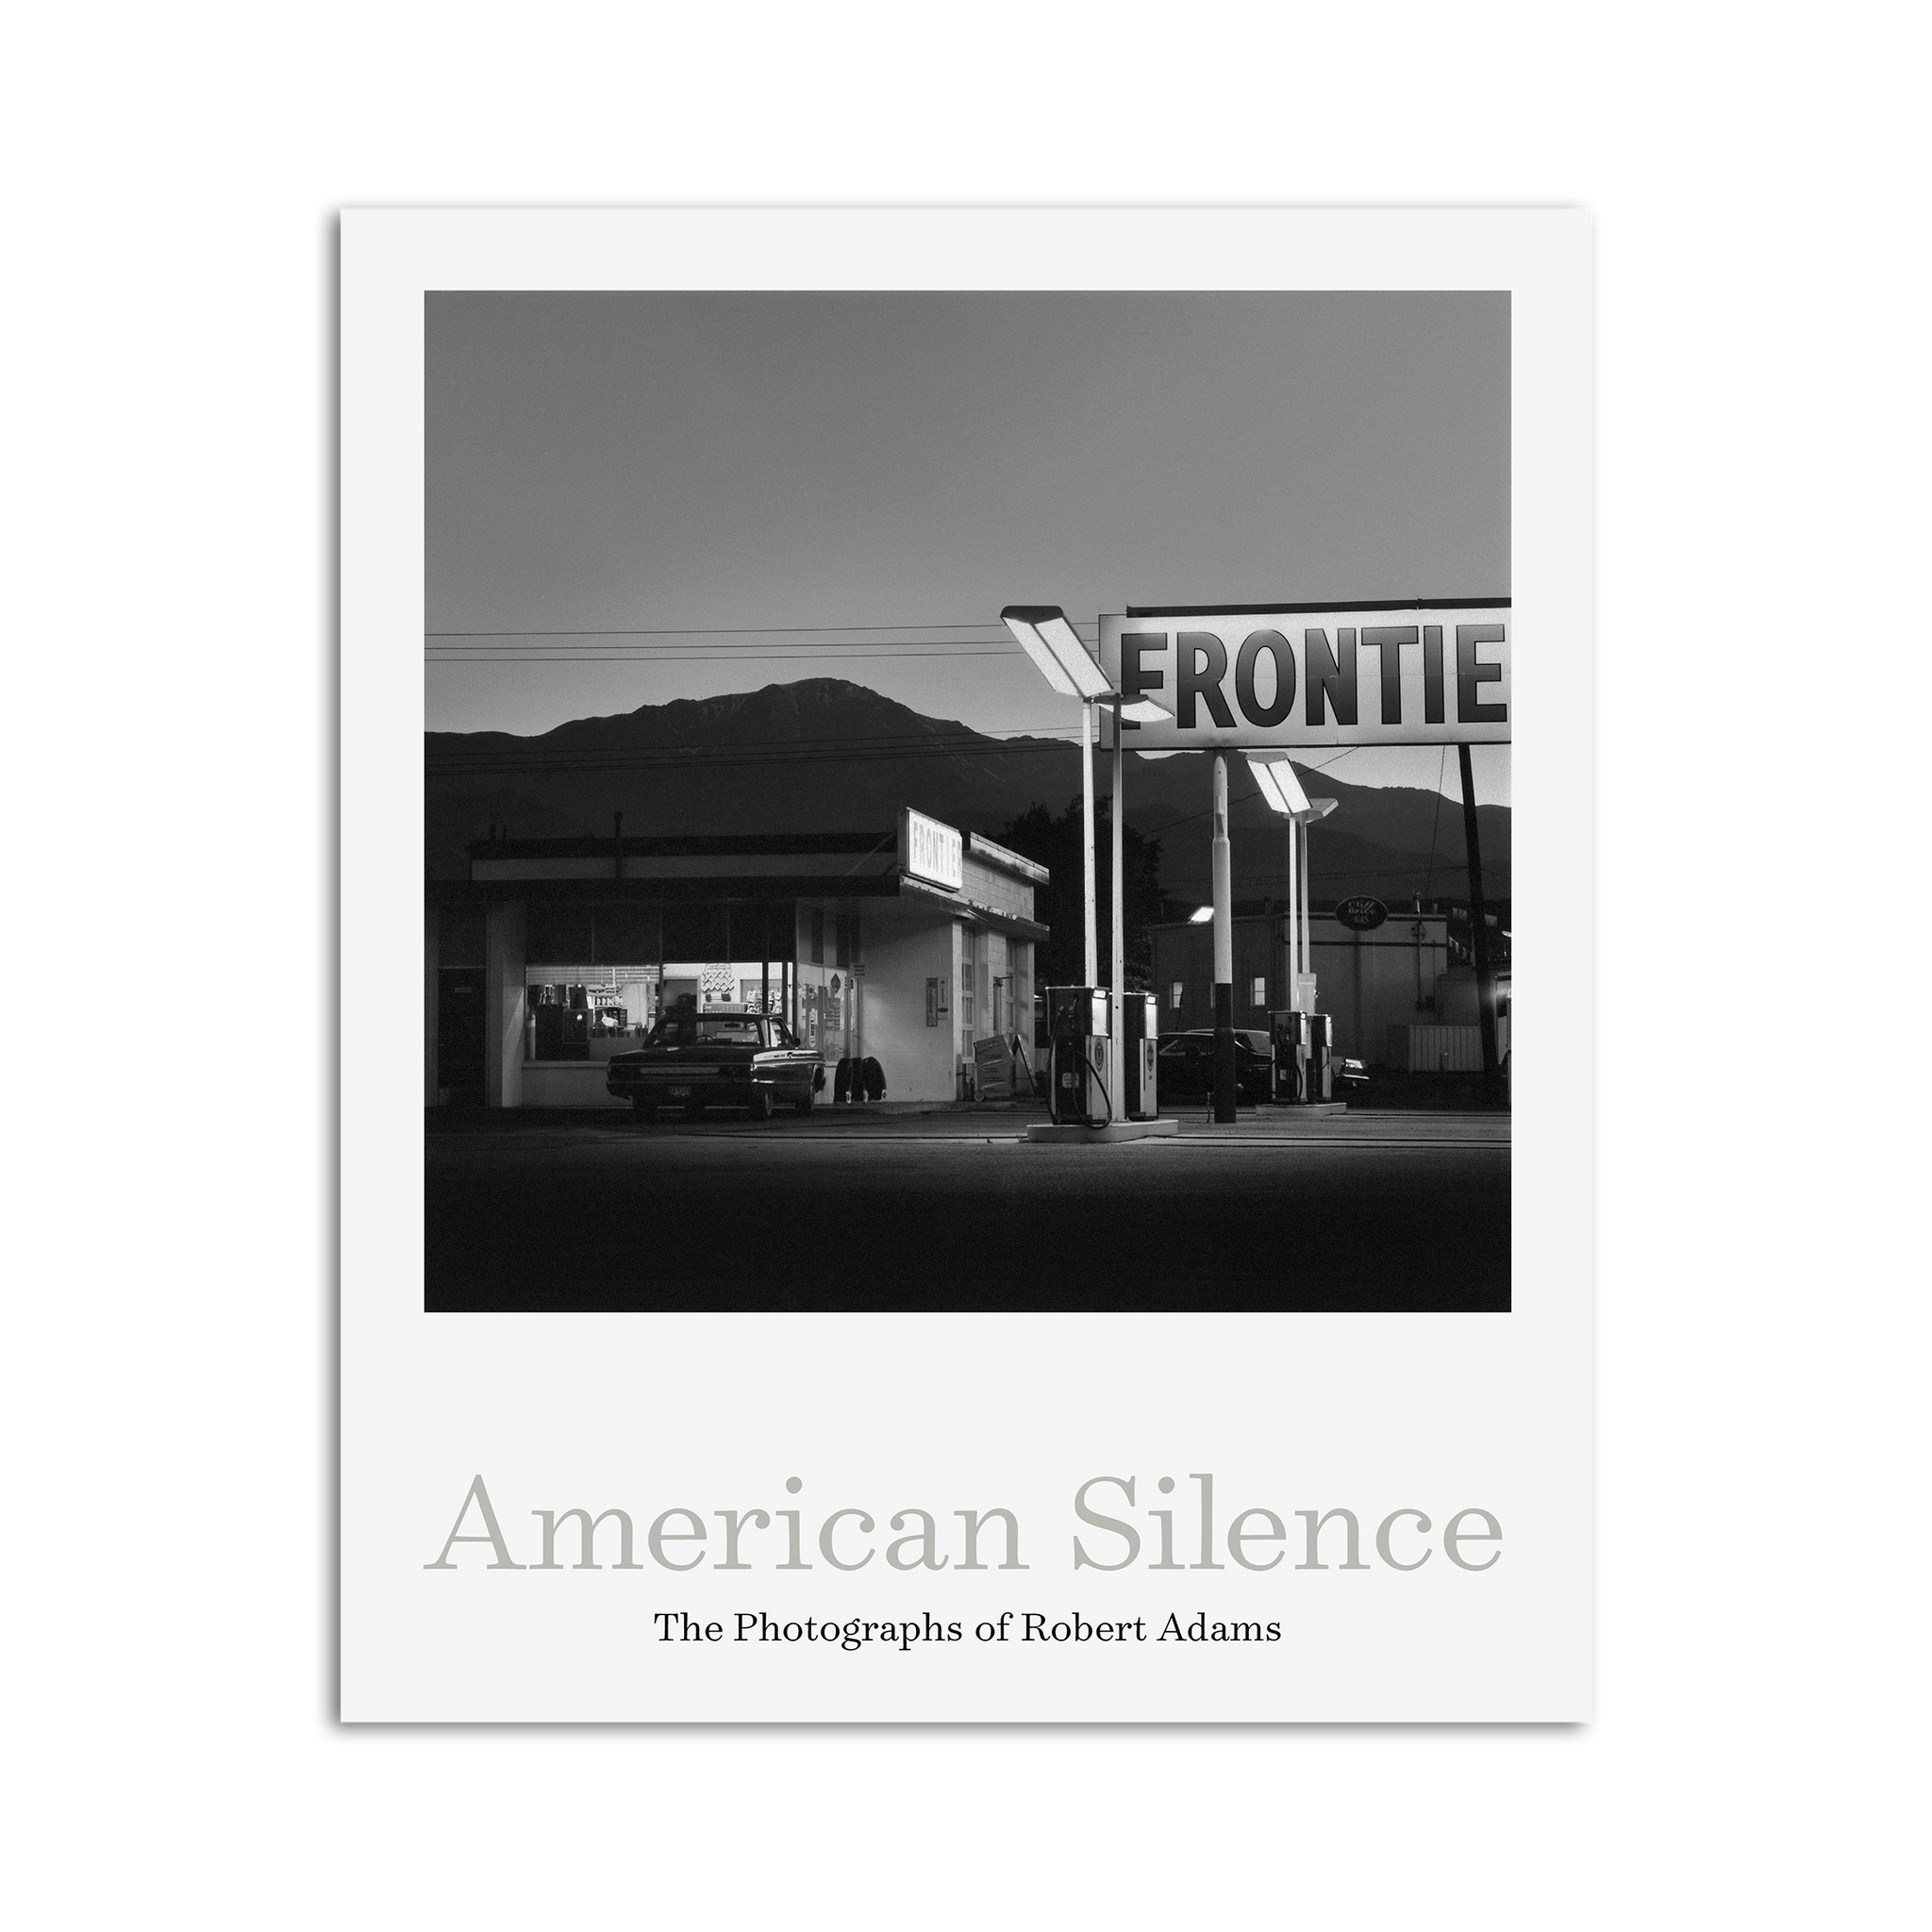 American Silence: The Photographs of Robert Adams